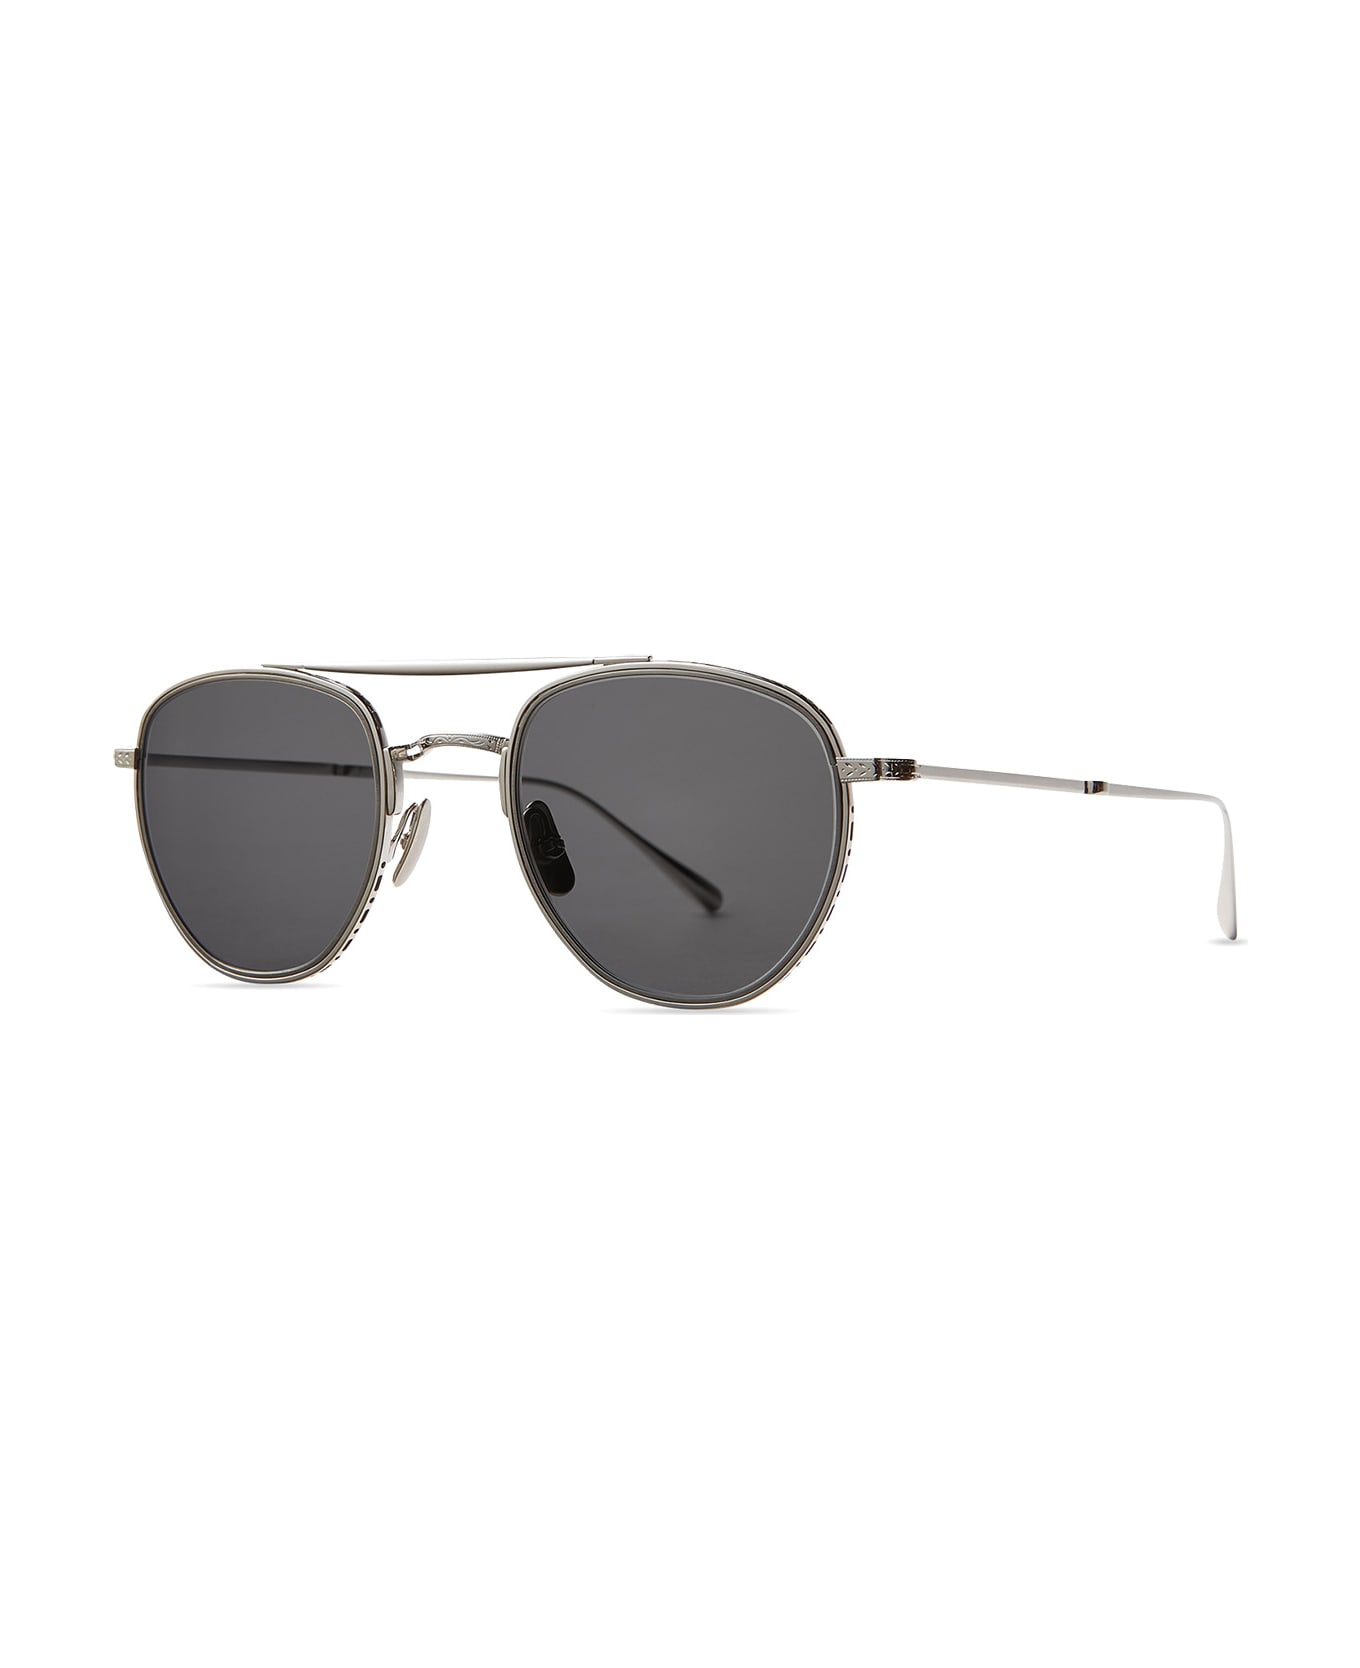 Mr. Leight Roku Ii S Platinum-pewter Sunglasses - Platinum-Pewter サングラス